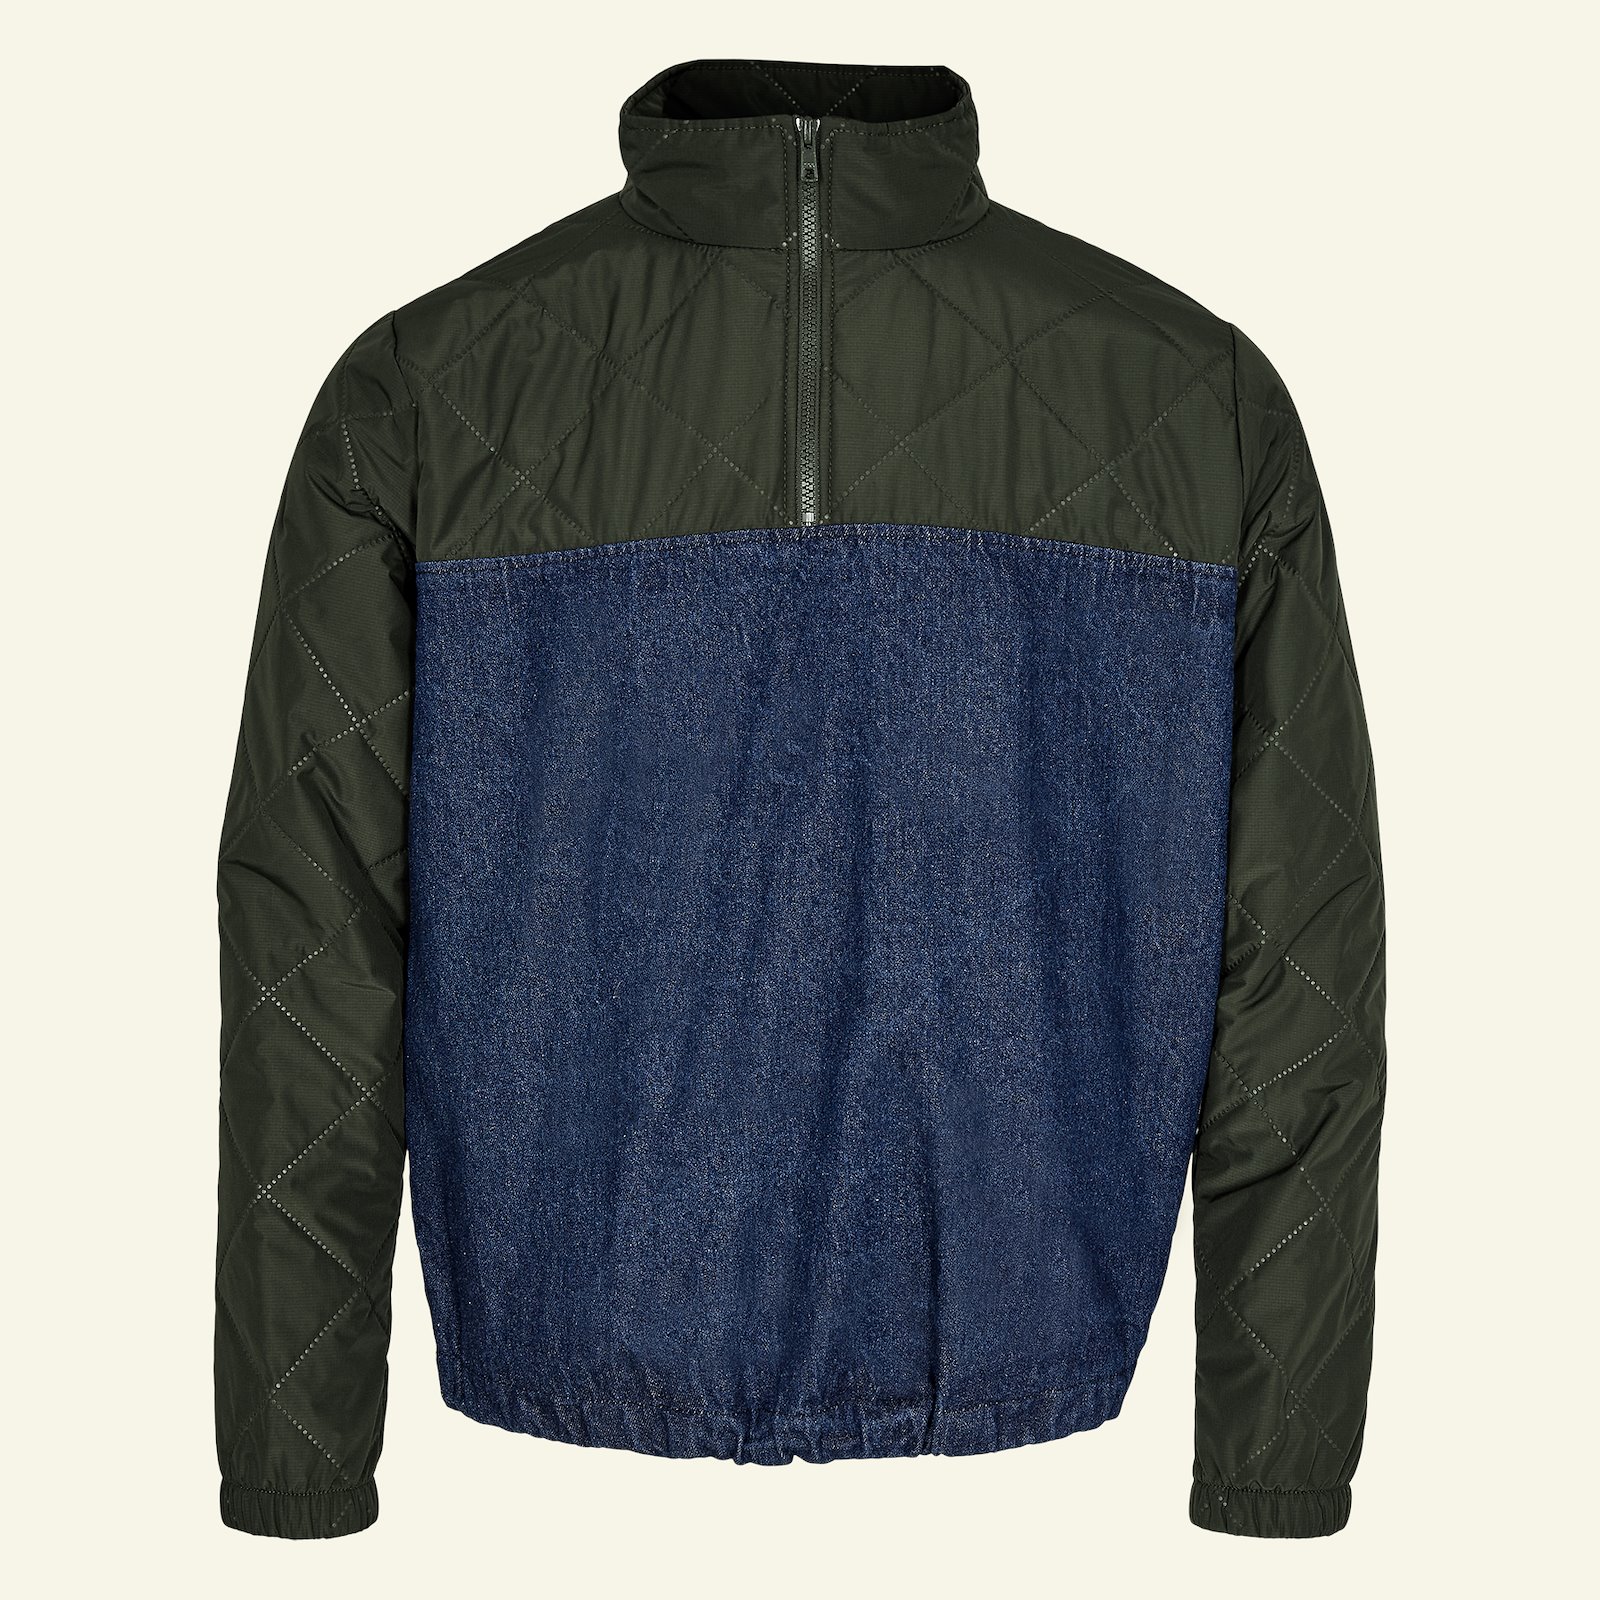 Sweatshirt and jacket, XL p87004_920264_400023_sskit